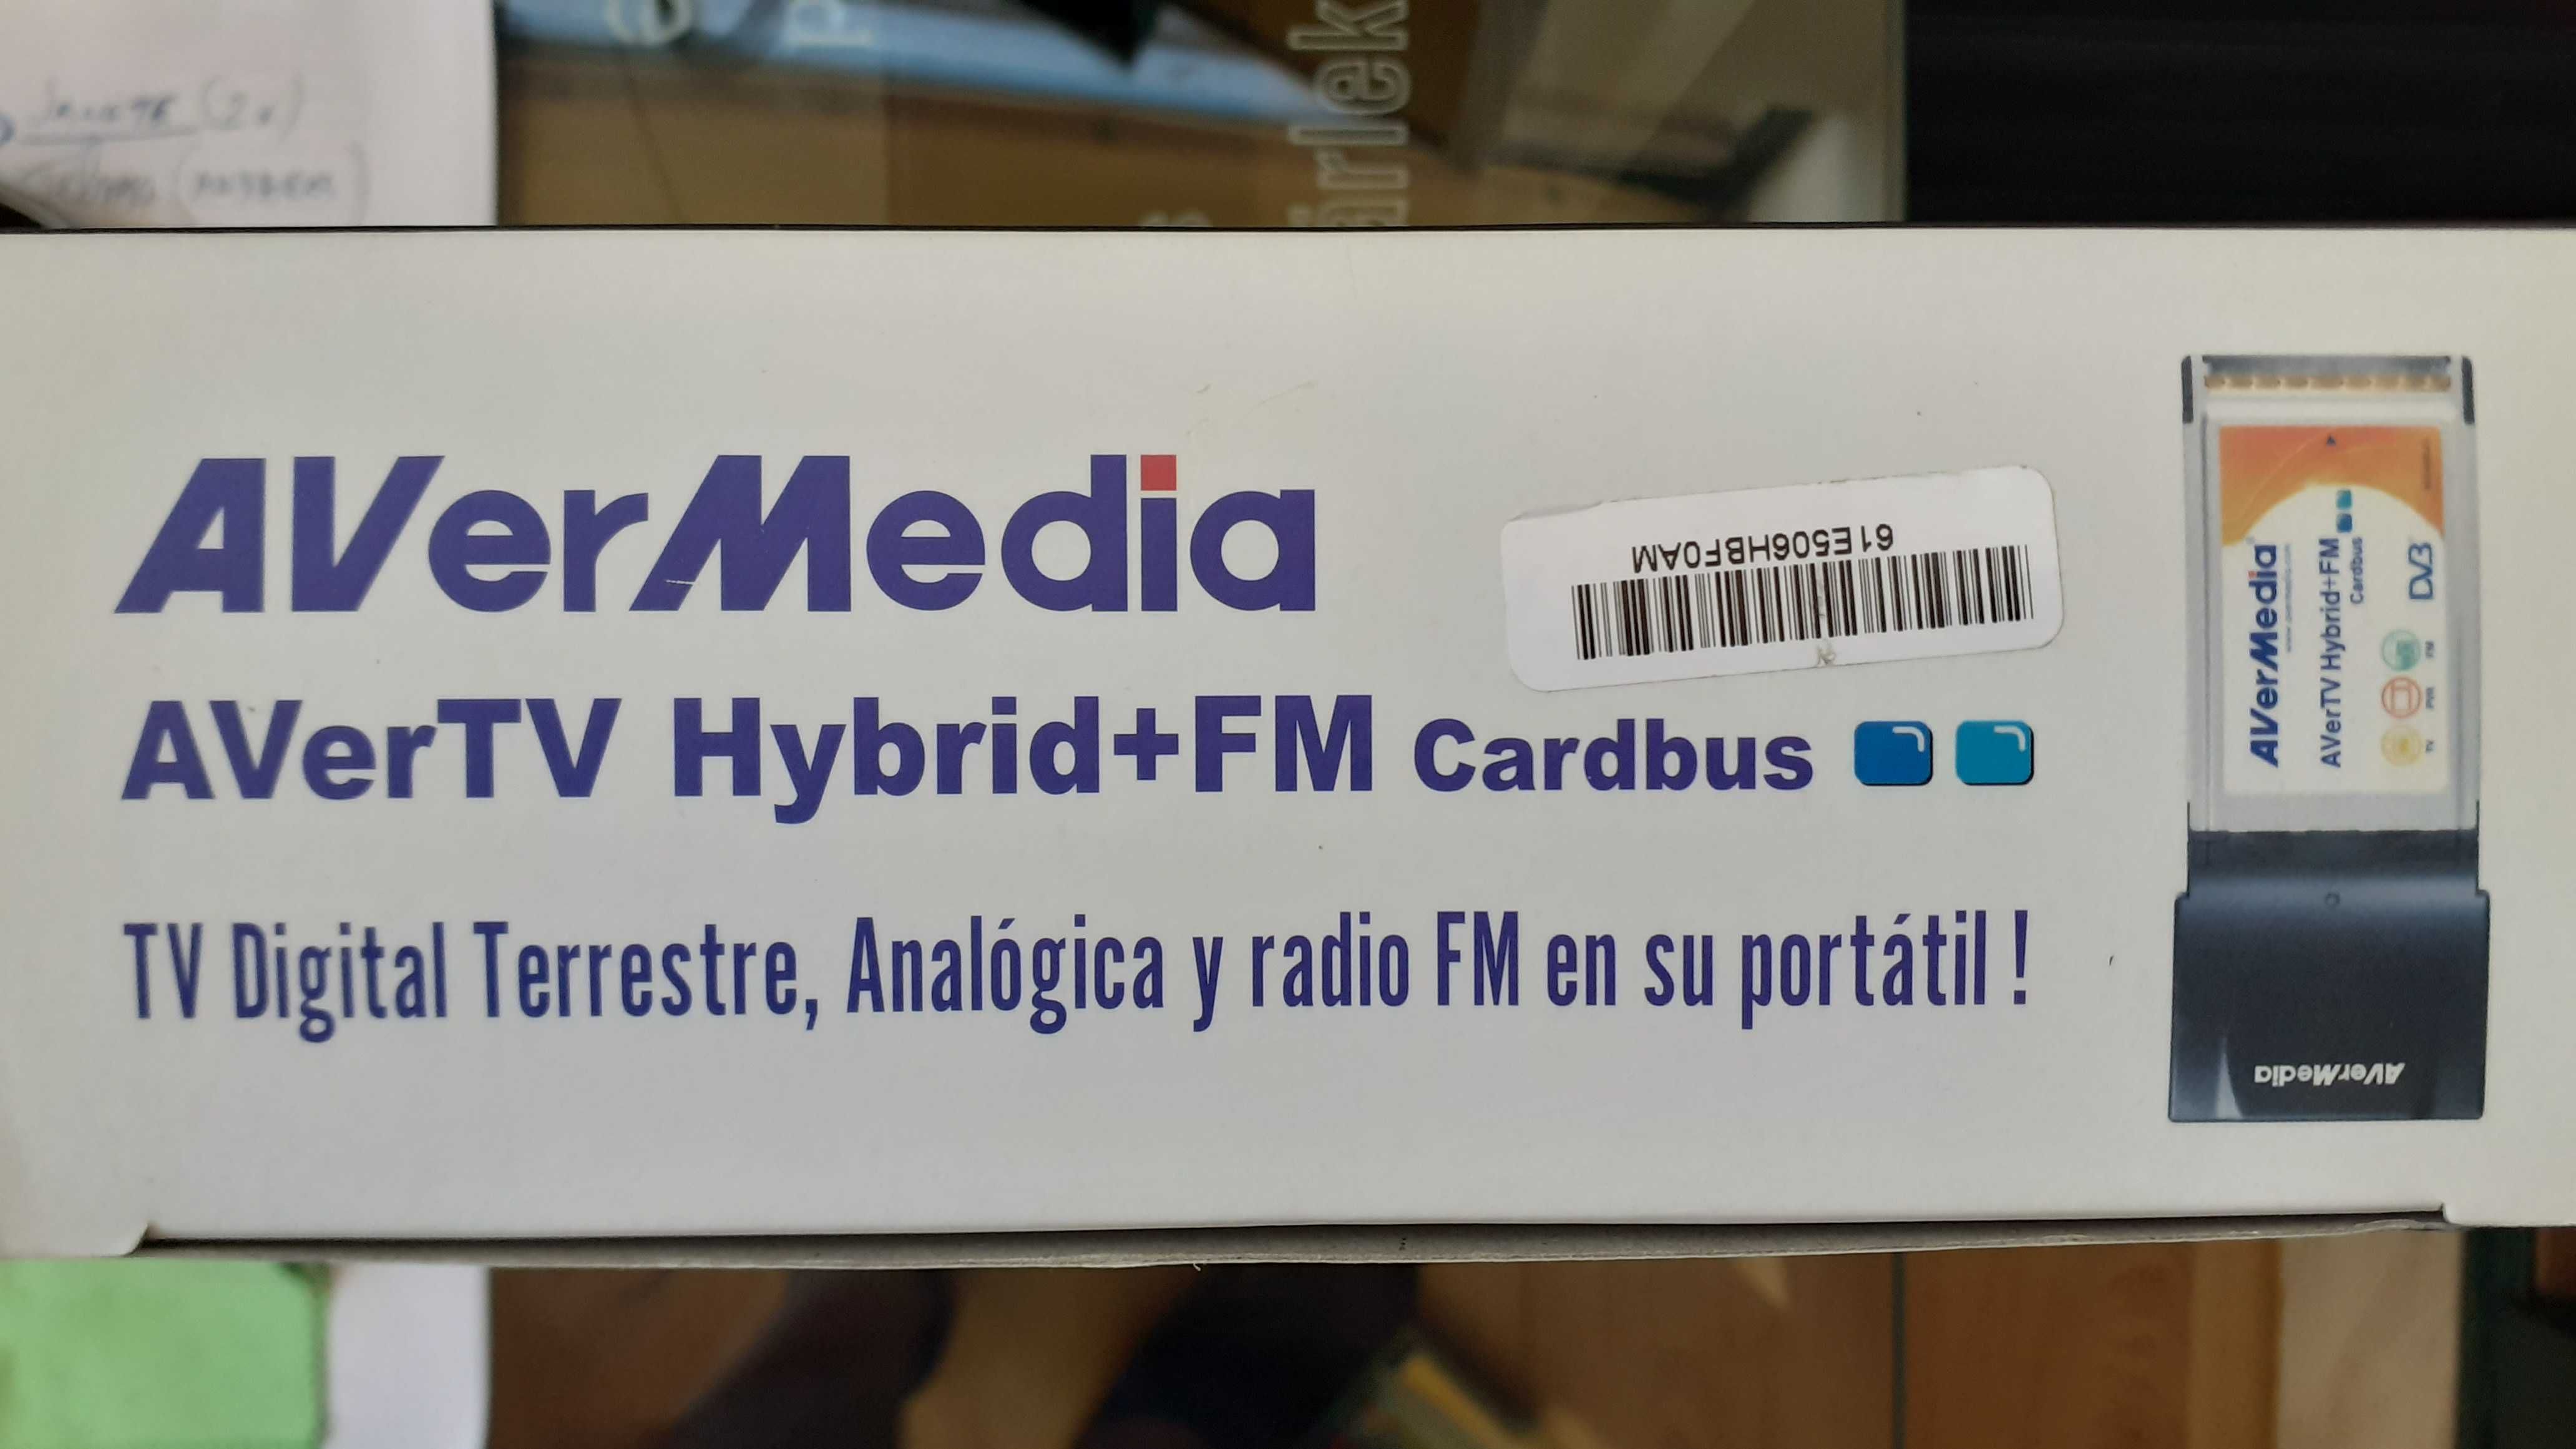 AverTV Hybrid+FM Cardbus